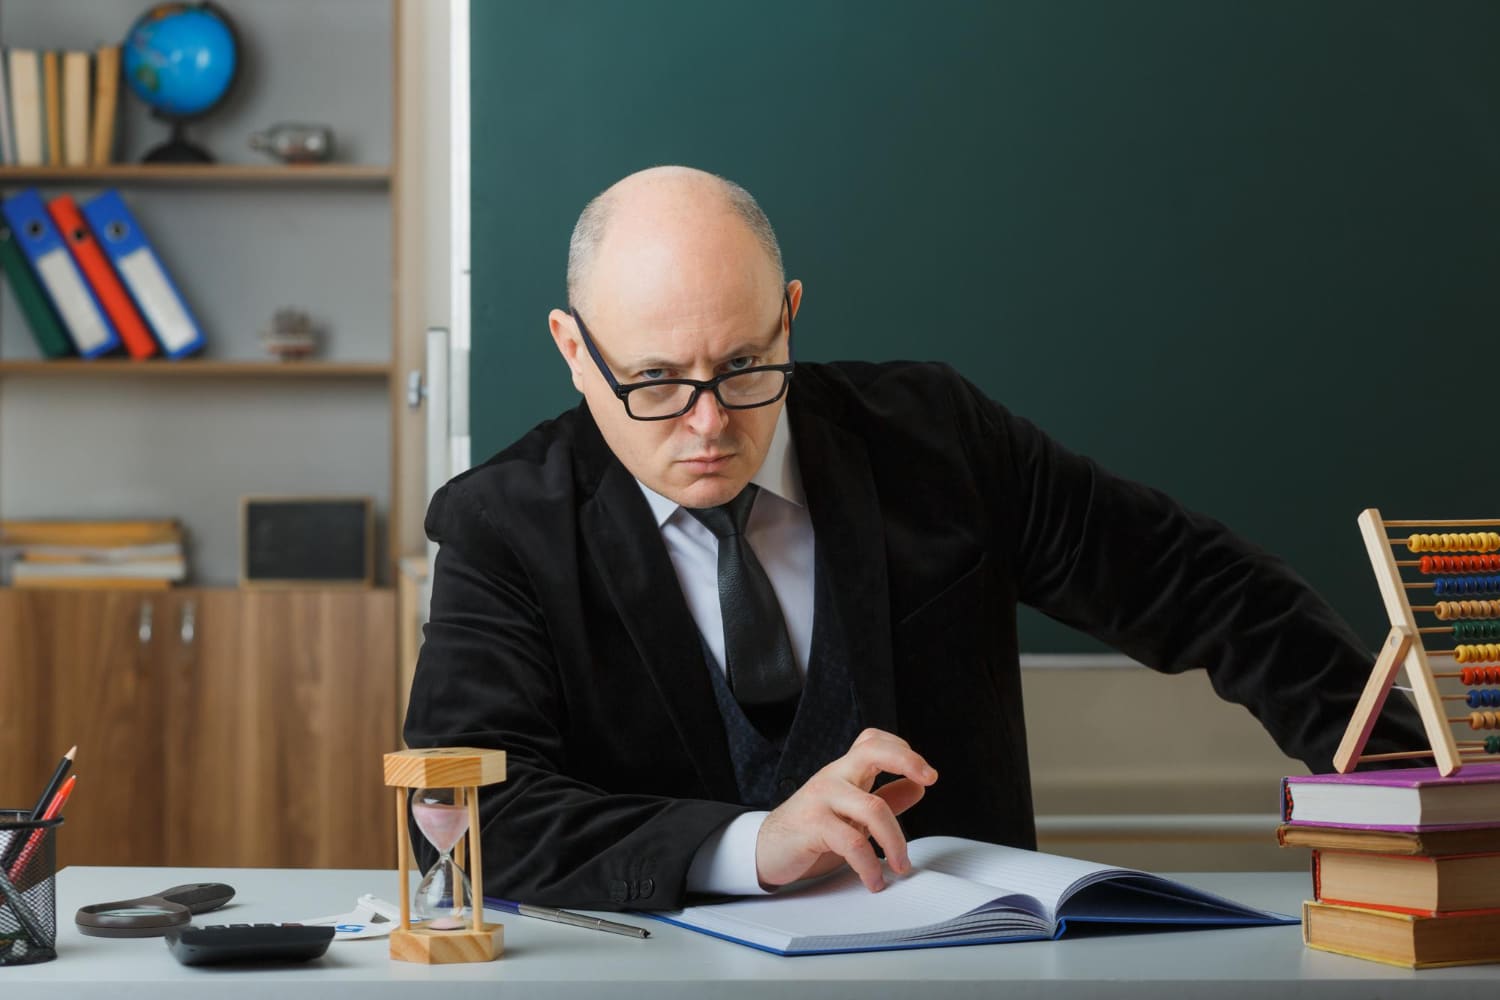 man teacher wearing glasses checking class register looking camera frowningly displeased sitting school desk front blackboard classroom